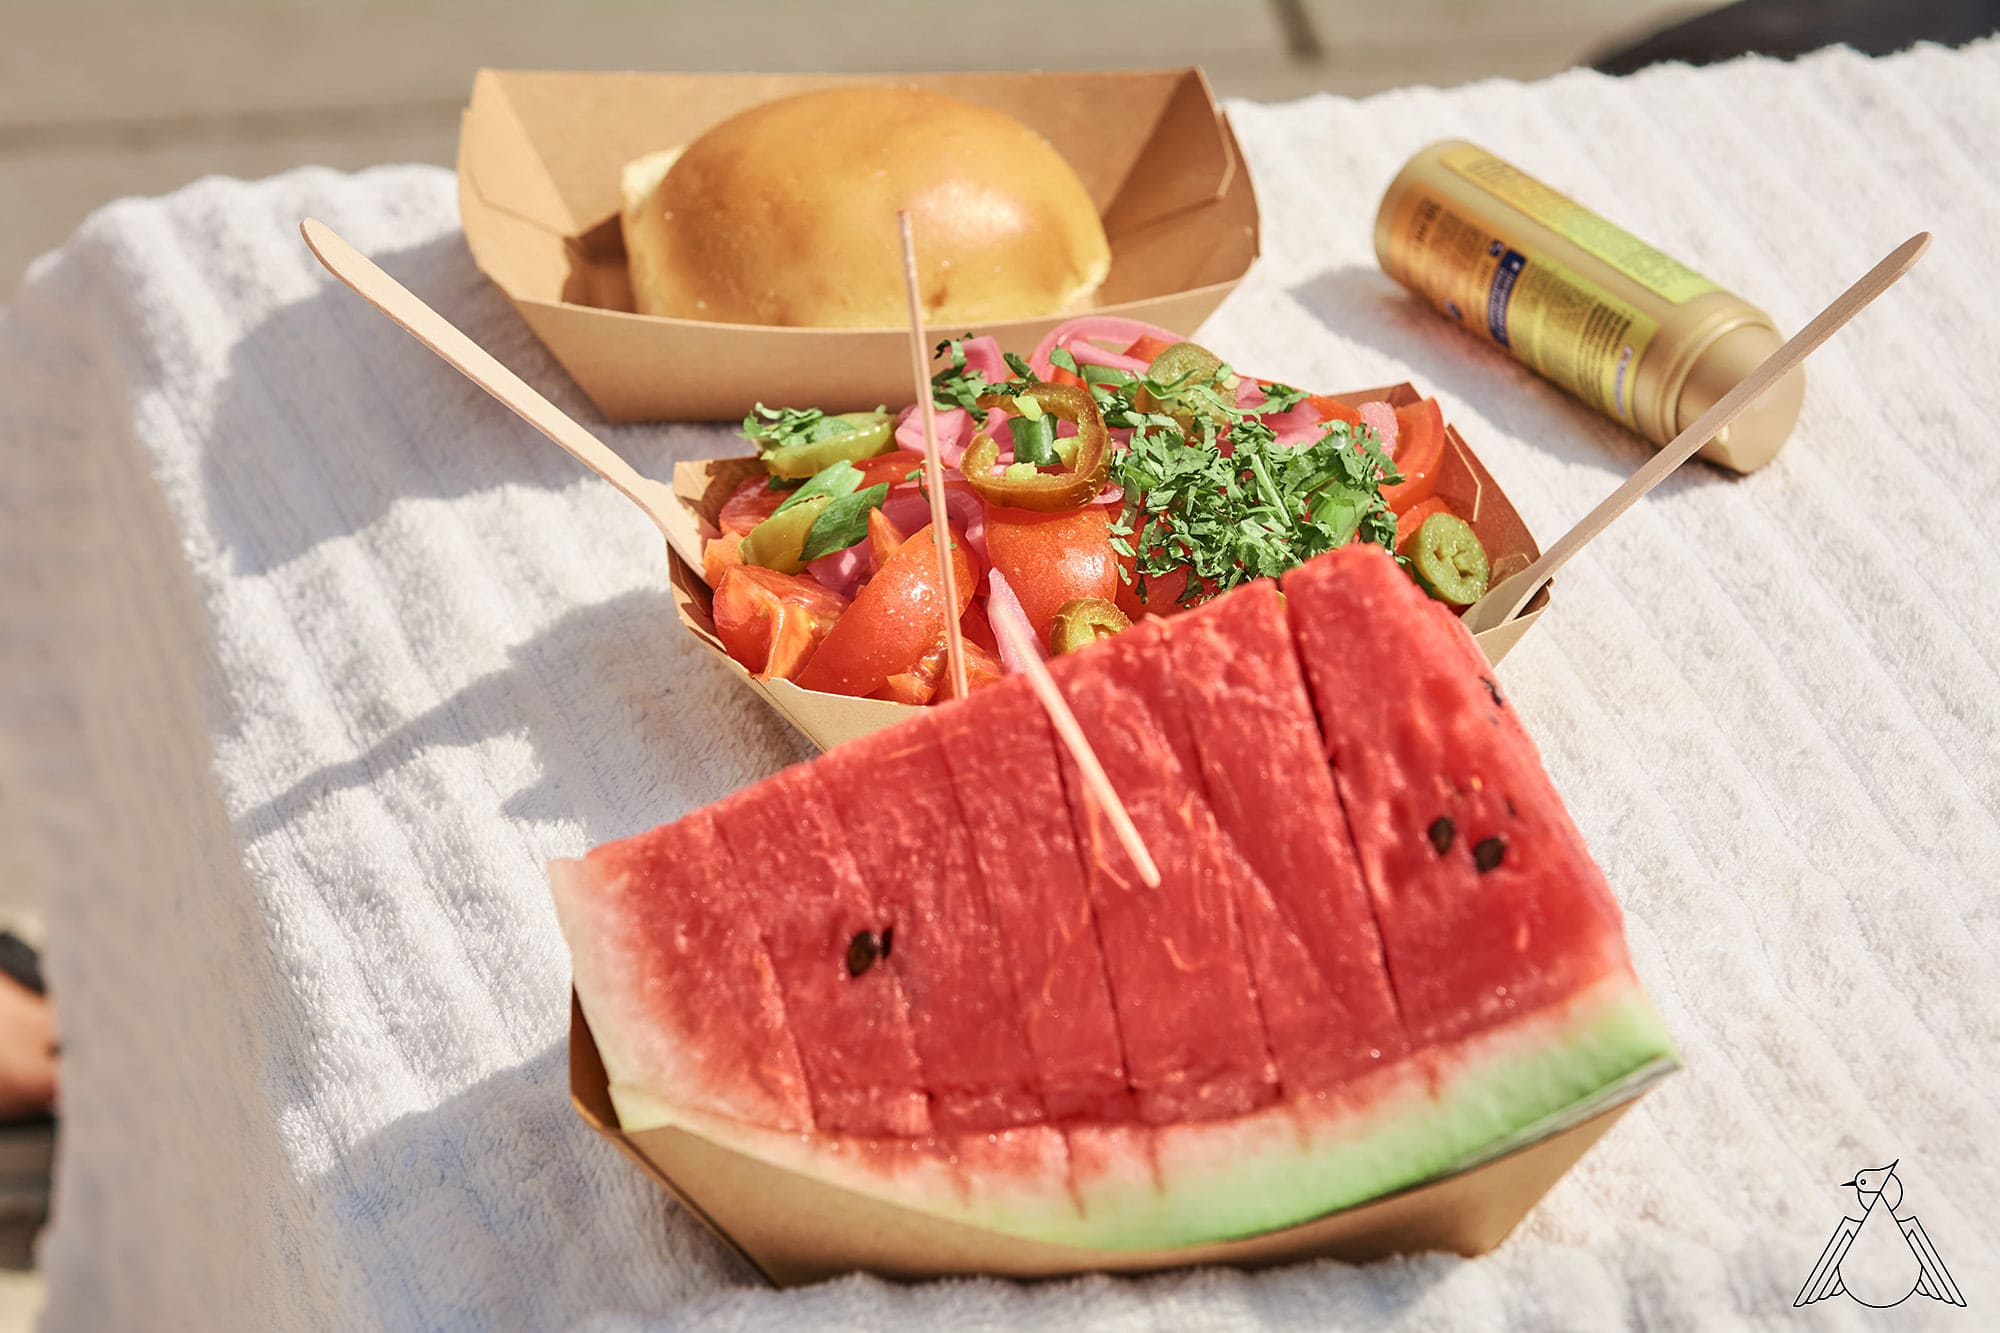 Haubentaucher Chicago Wiliiams Burger Tomatensalat Melone